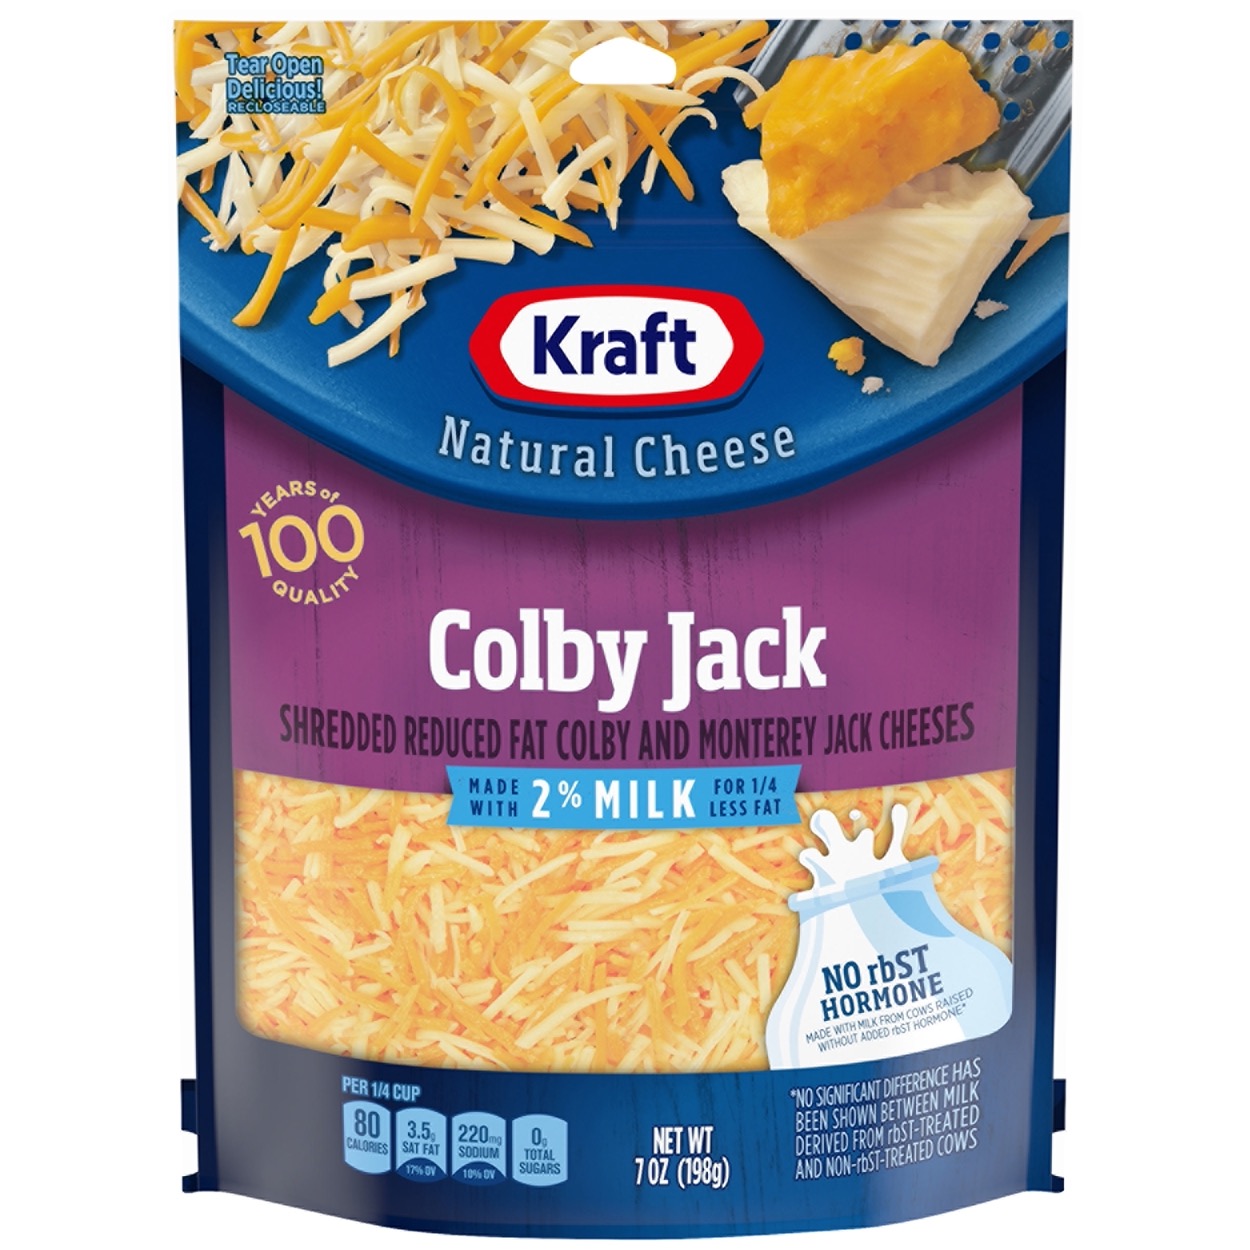 Colby Jack (2% Milk)